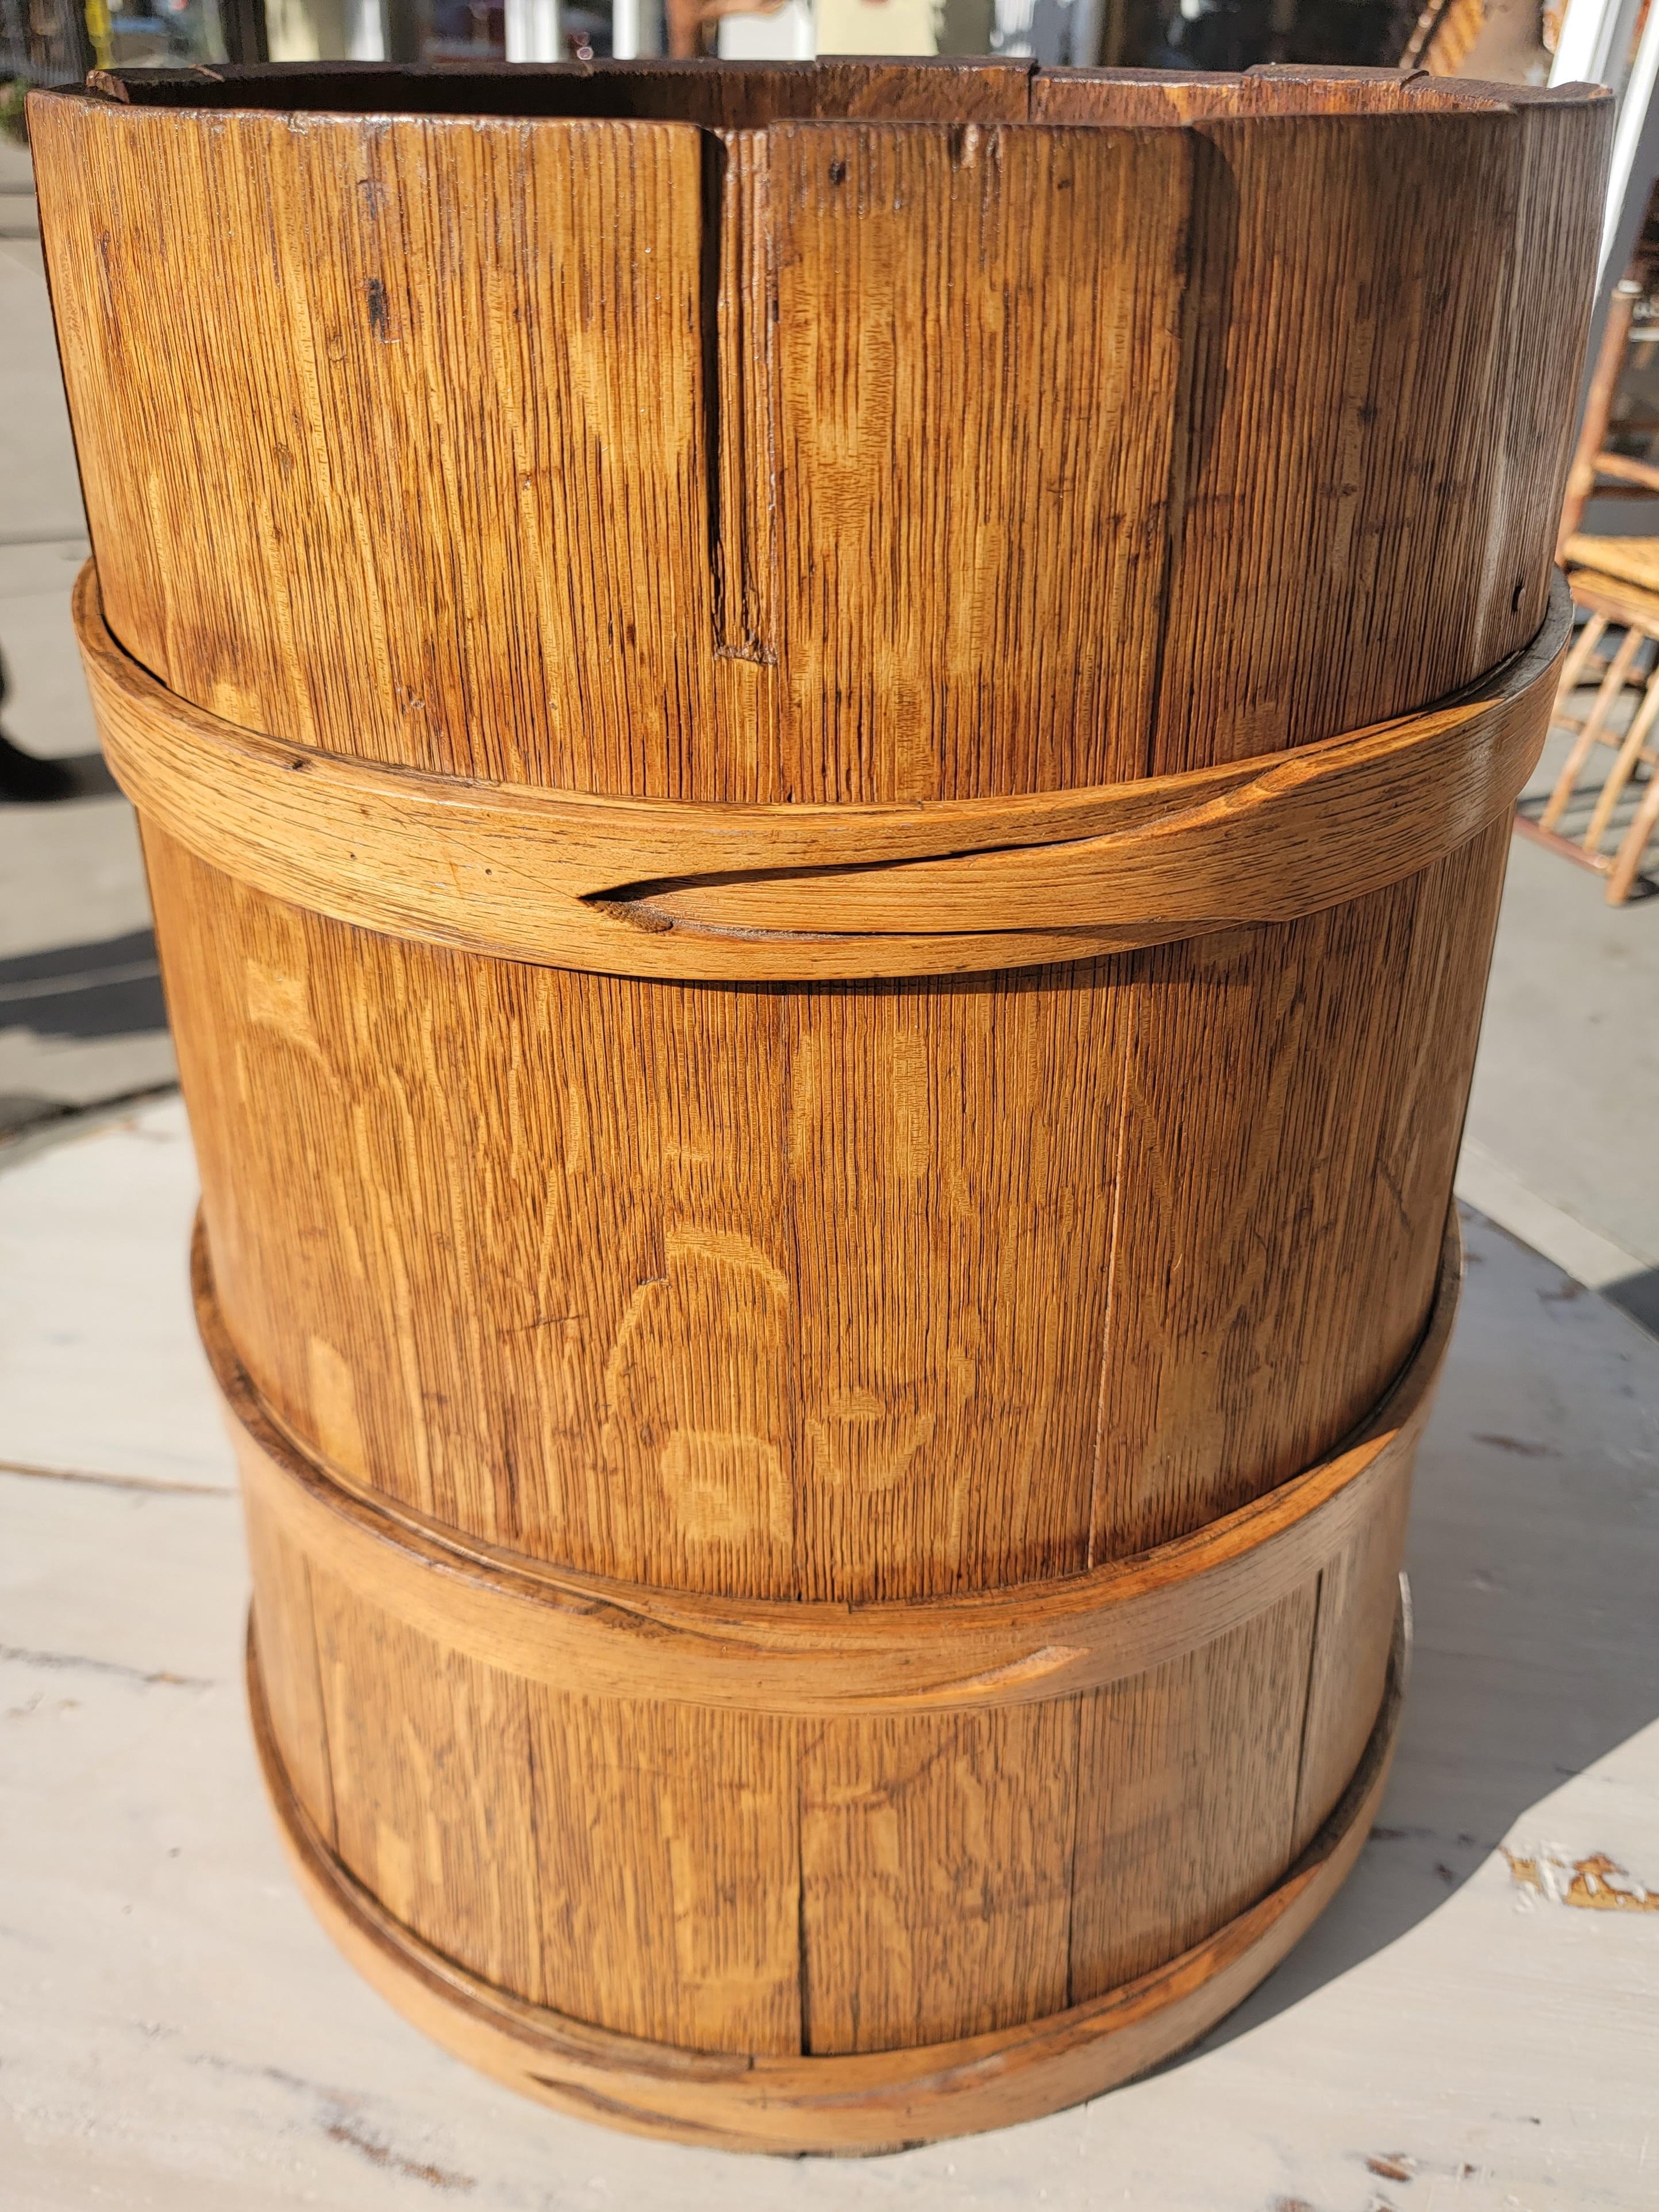 Wood 19th C Piggin or Measure Bucket For Sale